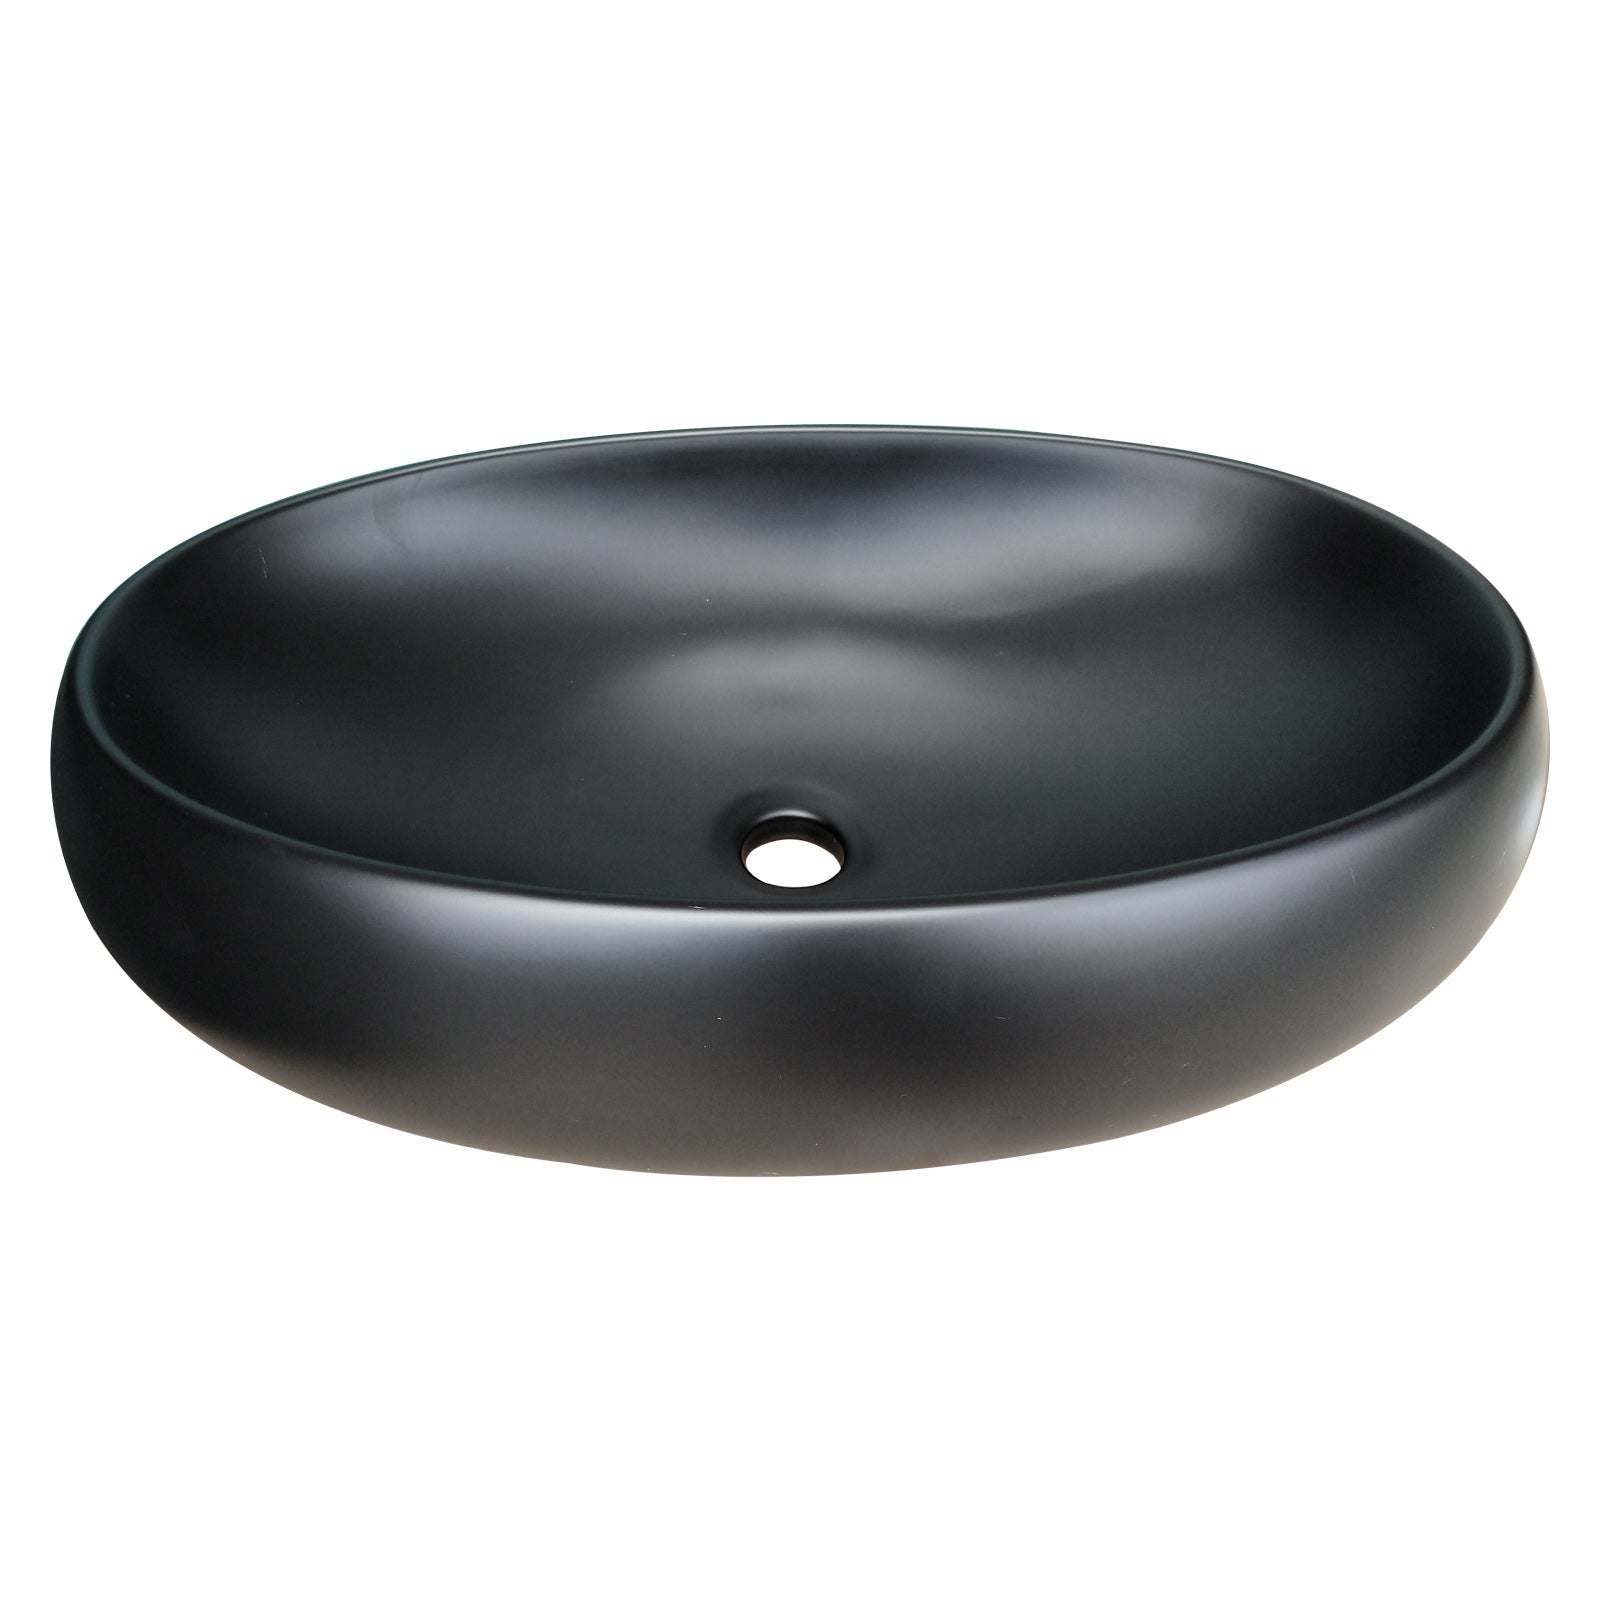 ACA 600*400*155mm Bathroom Oval Above Counter Matt Black Ceramic Wash Basin